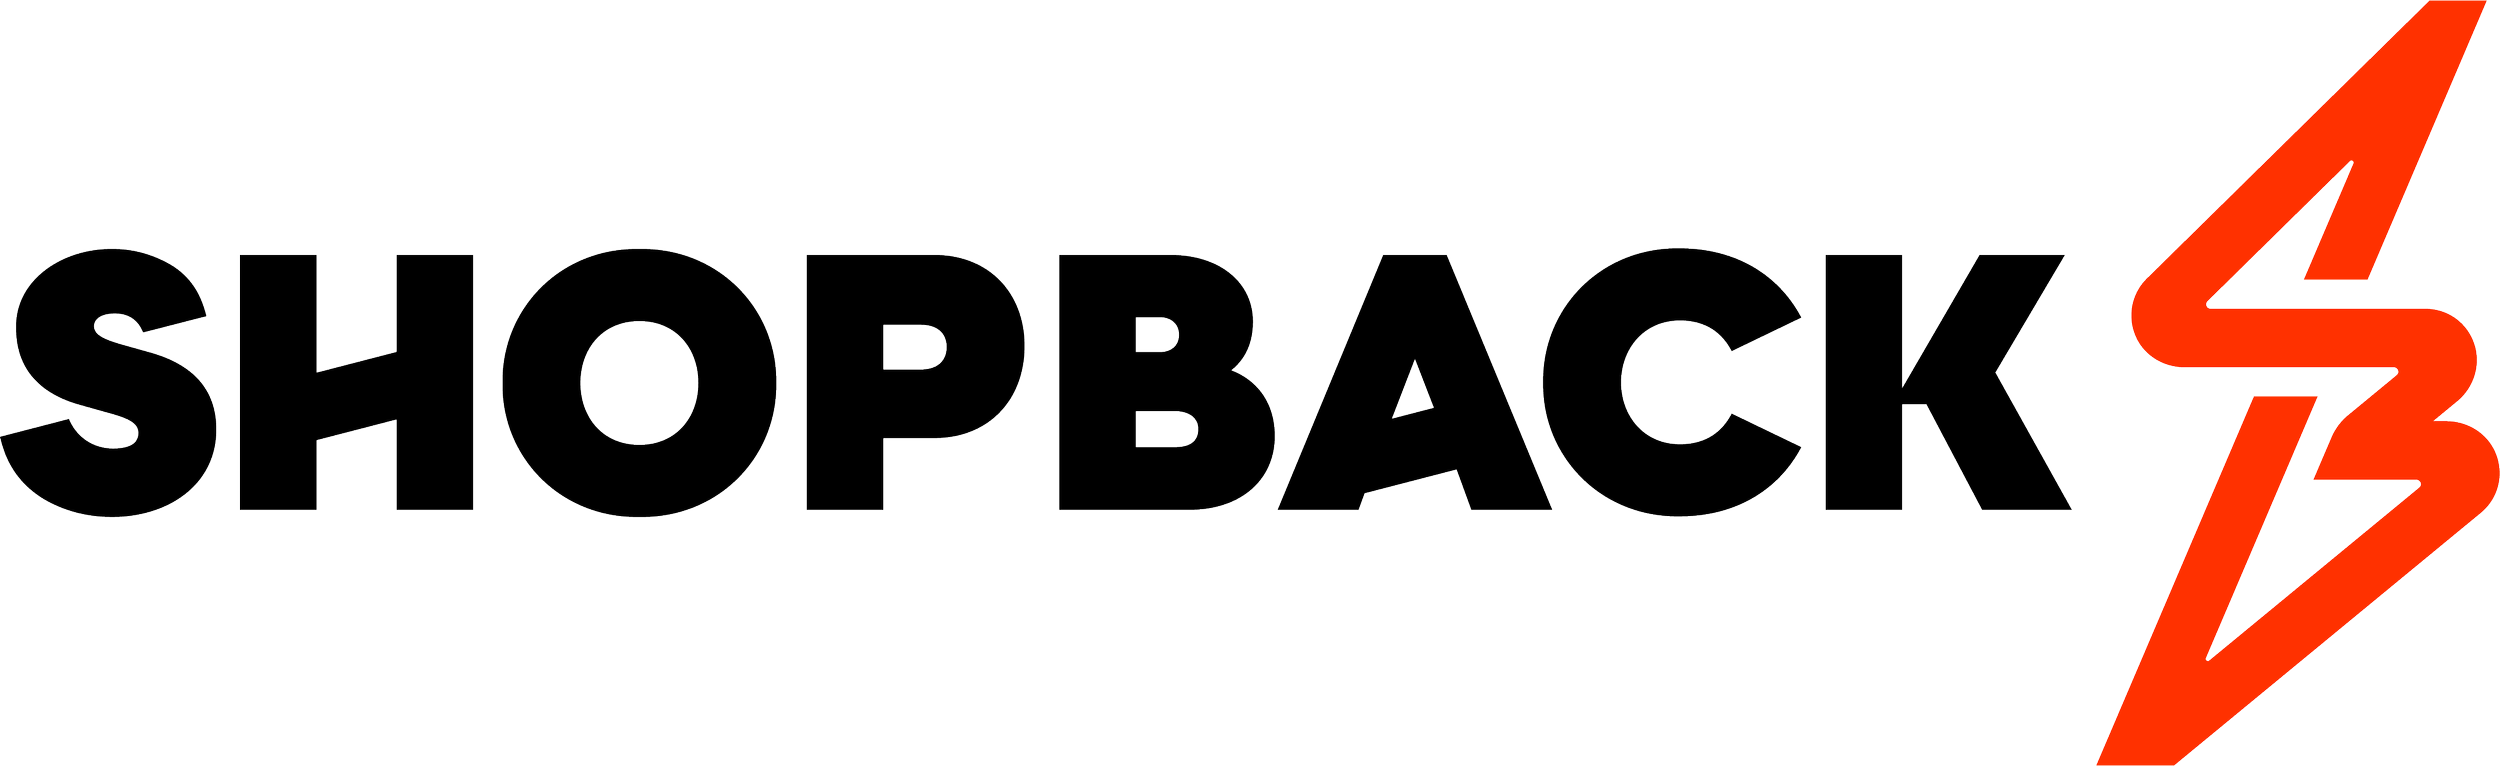 ShopBack_logo.png